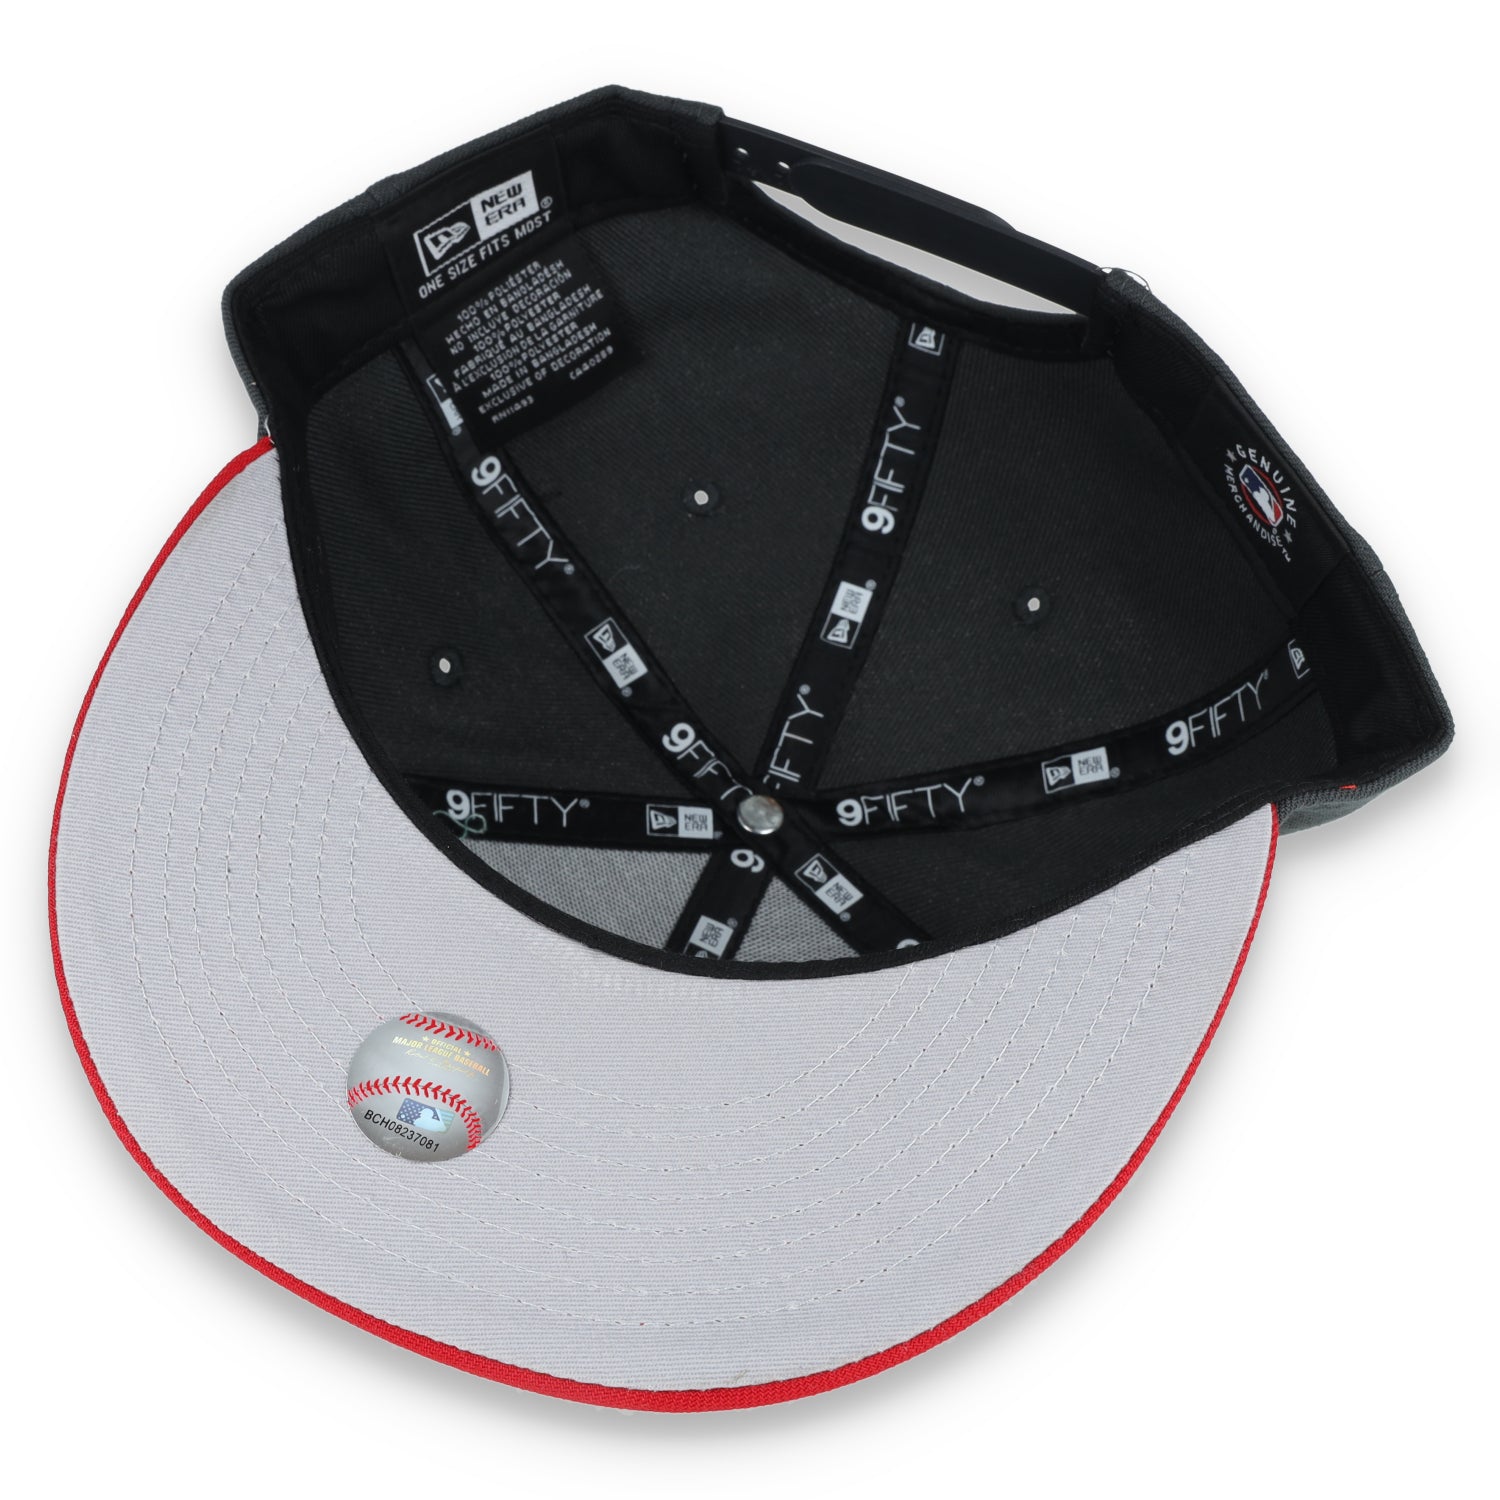 New Era Atlanta Braves 2-Tone Color Pack 9FIFTY Snapback Hat-Grey/Scarlet